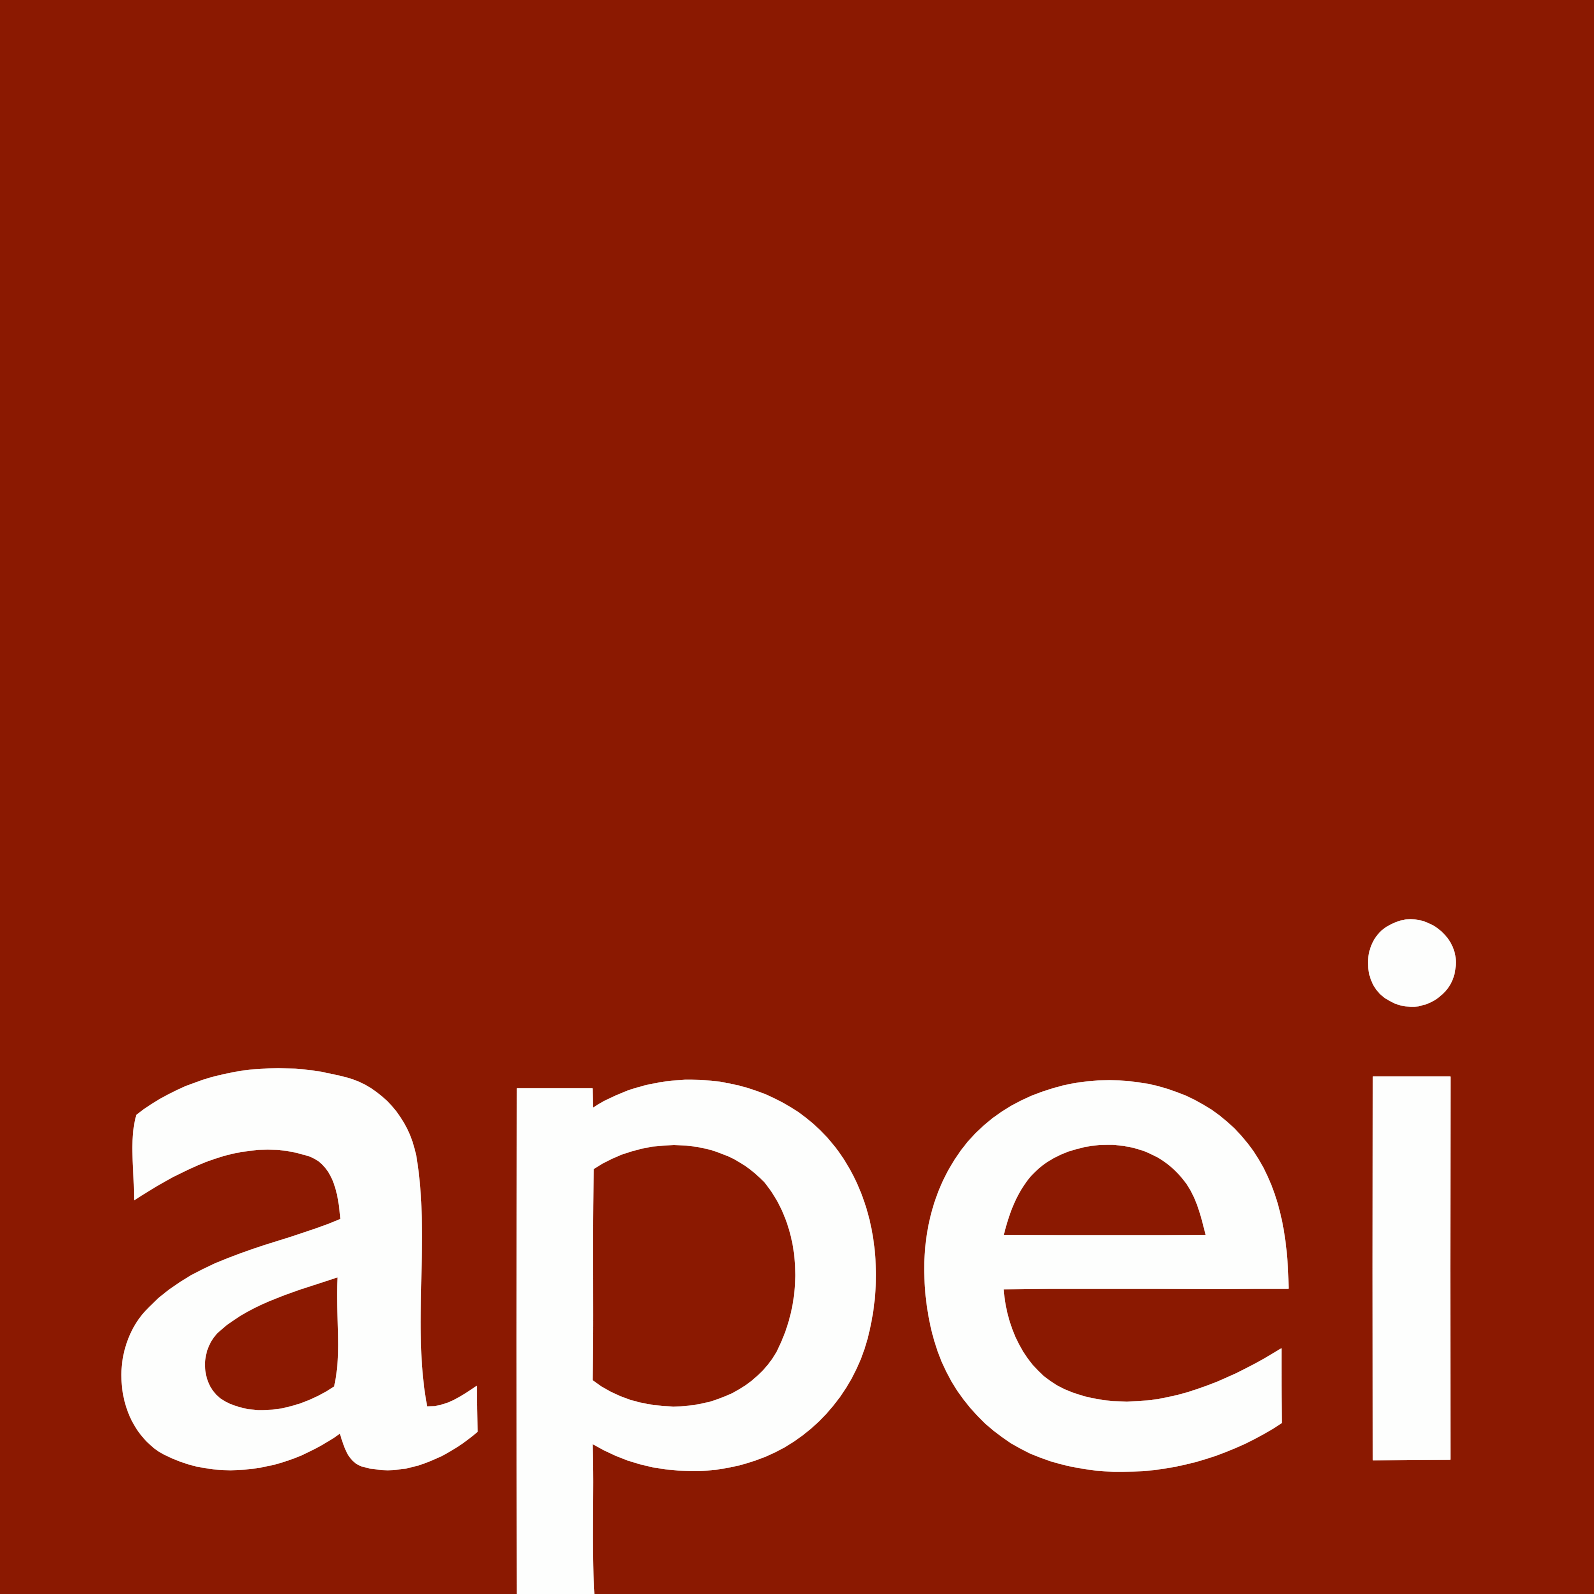 American Public Education logo (PNG transparent)